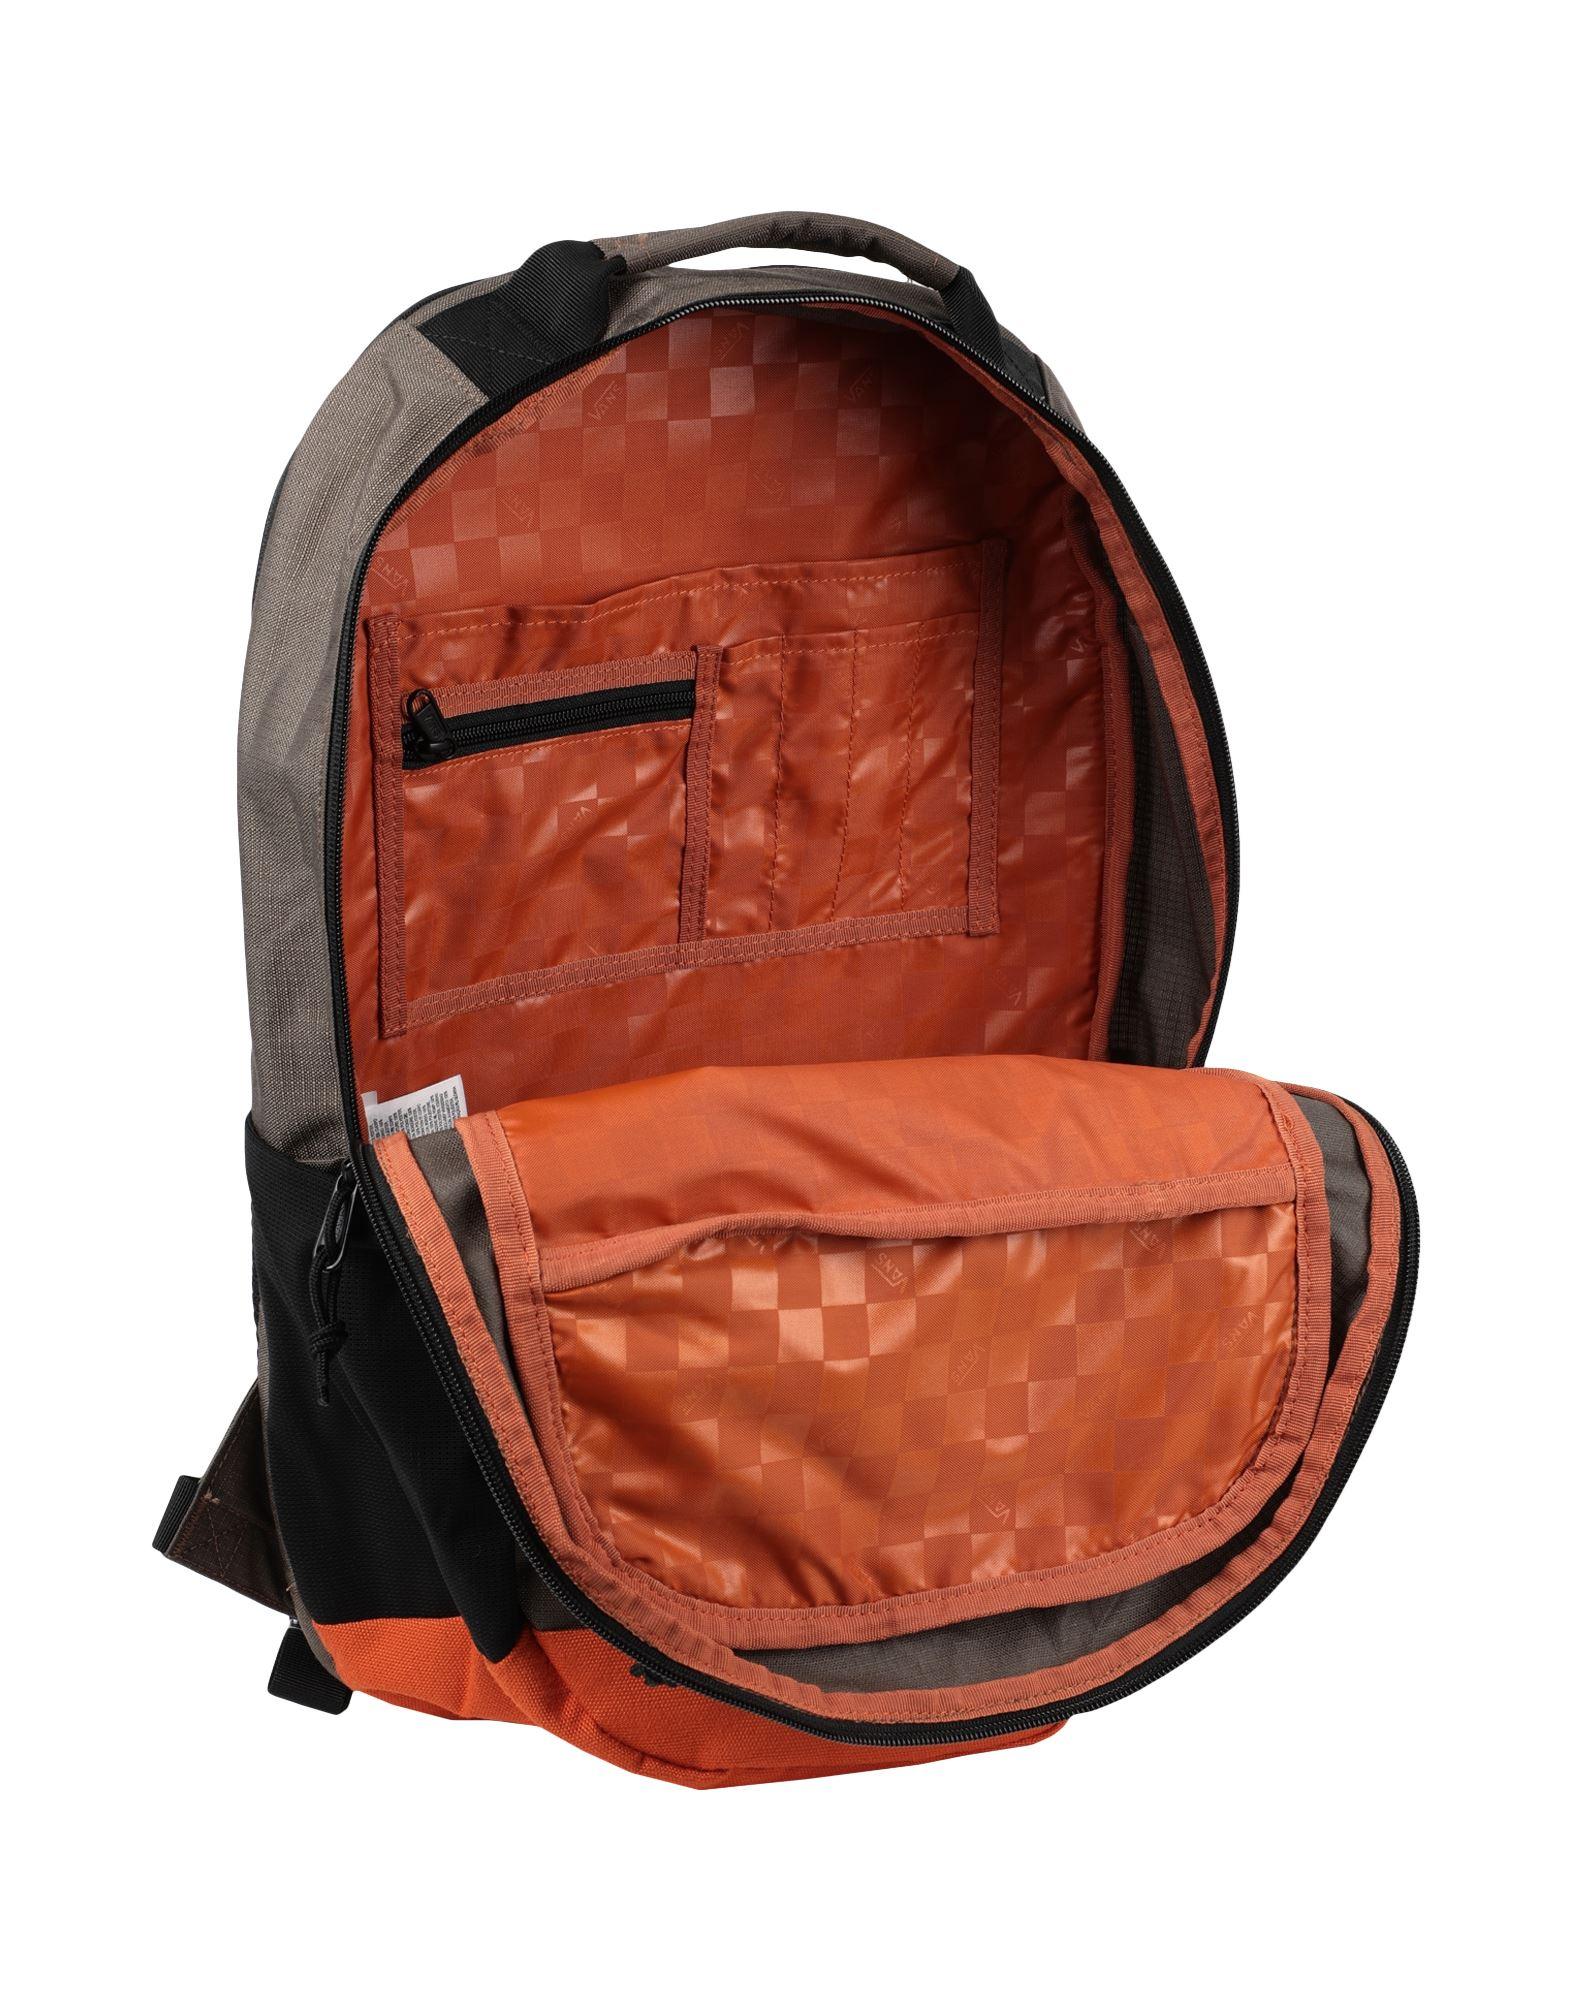 Vans Synthetic Backpack in Brown for Men - Lyst